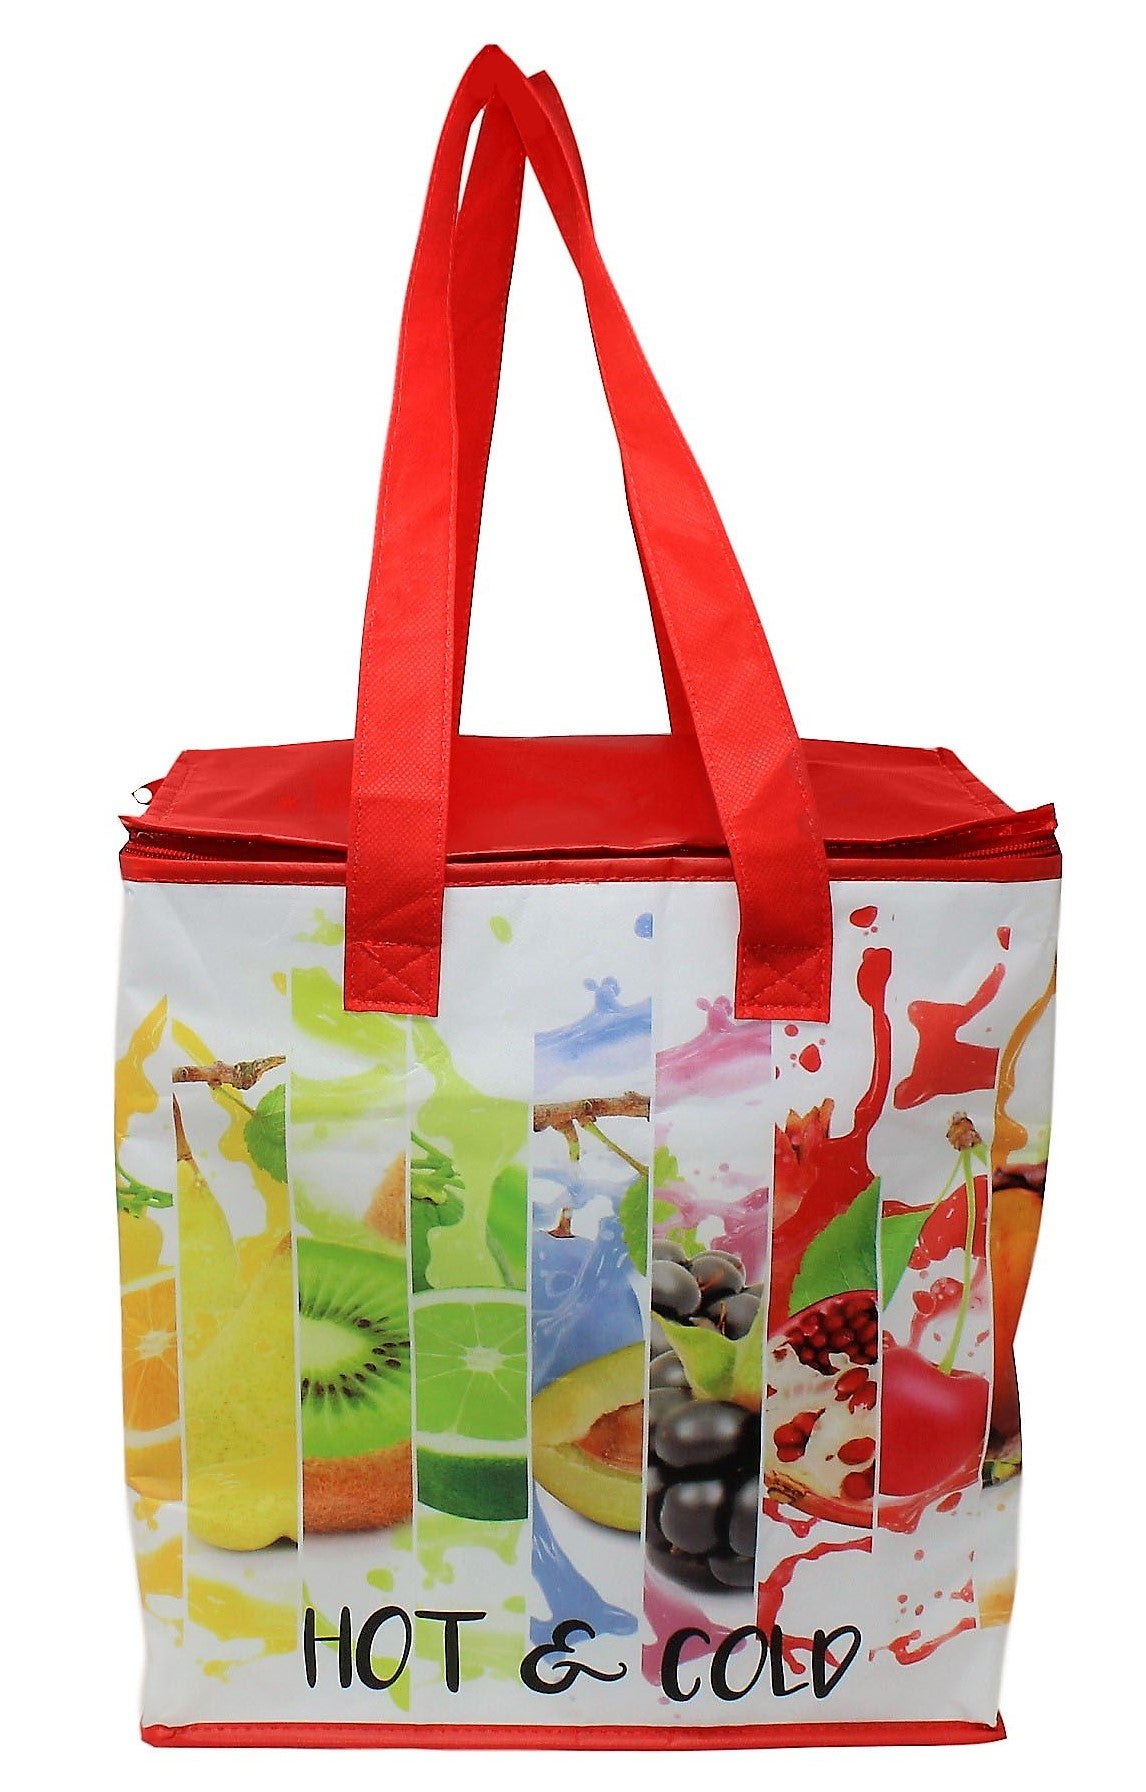 Custom Lunch Bags – Earthwise Reusable Bags